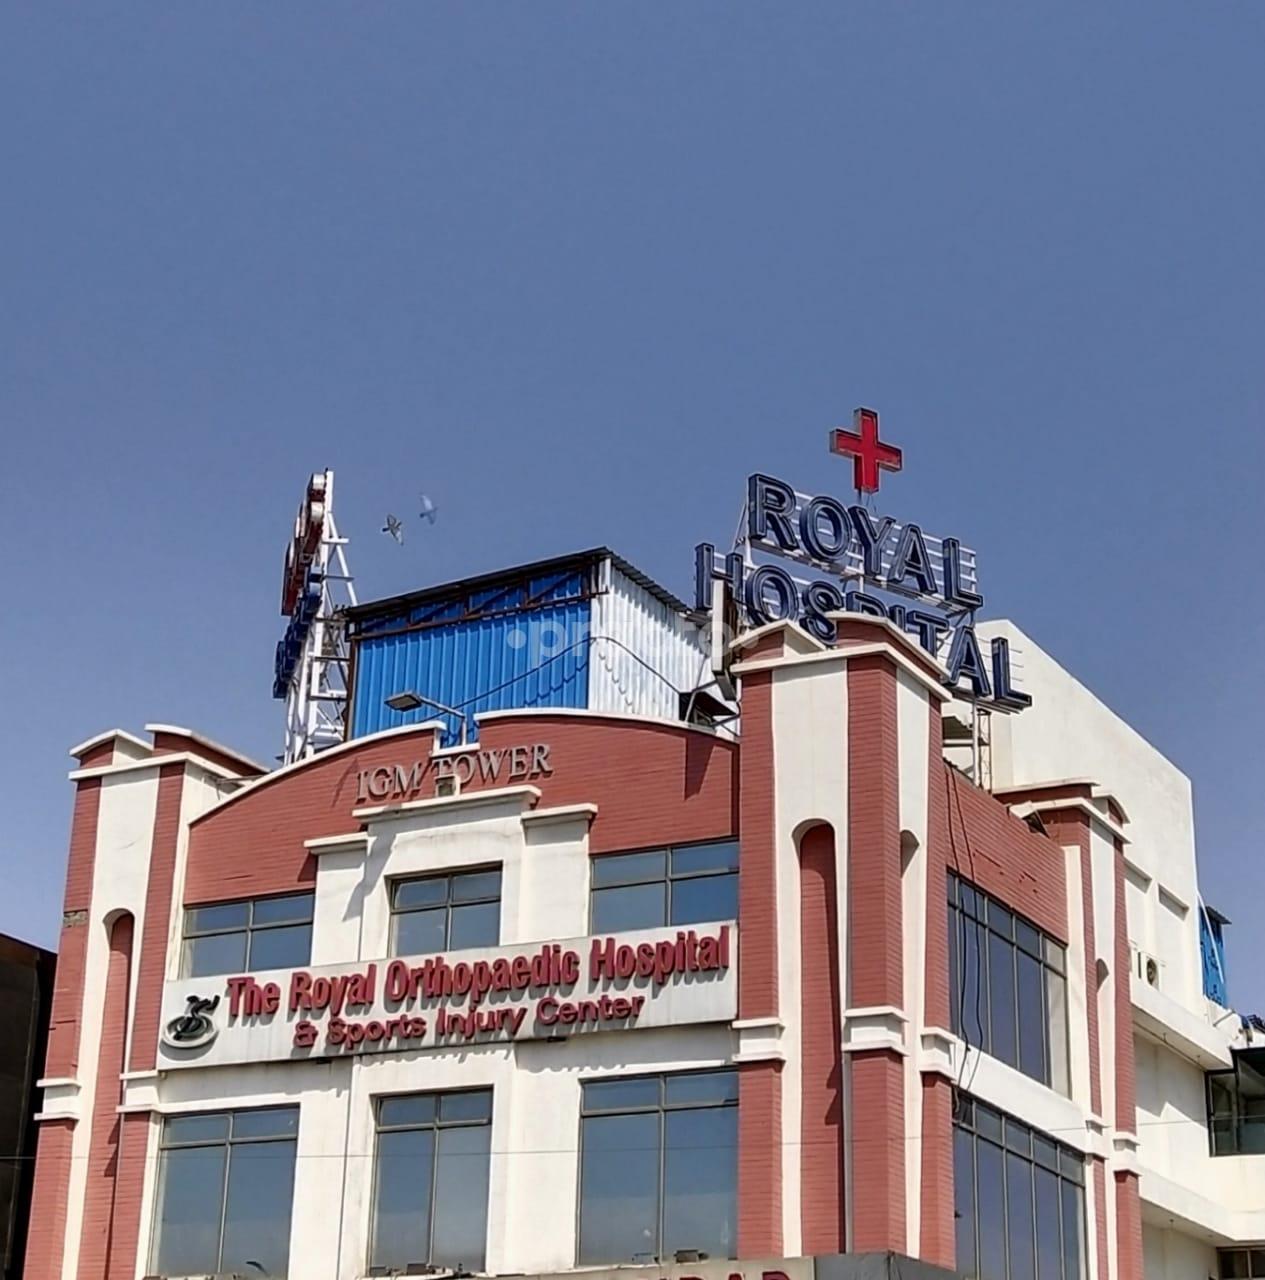 The Royal Orthopaedic Hospital and Sports Injury Centre from Lalkothi B-73-A, Sahakar Marg, Near imli Fatak, Lal Kothi Scheme ,Jaipur ,Rajasthan, India | Kayawell